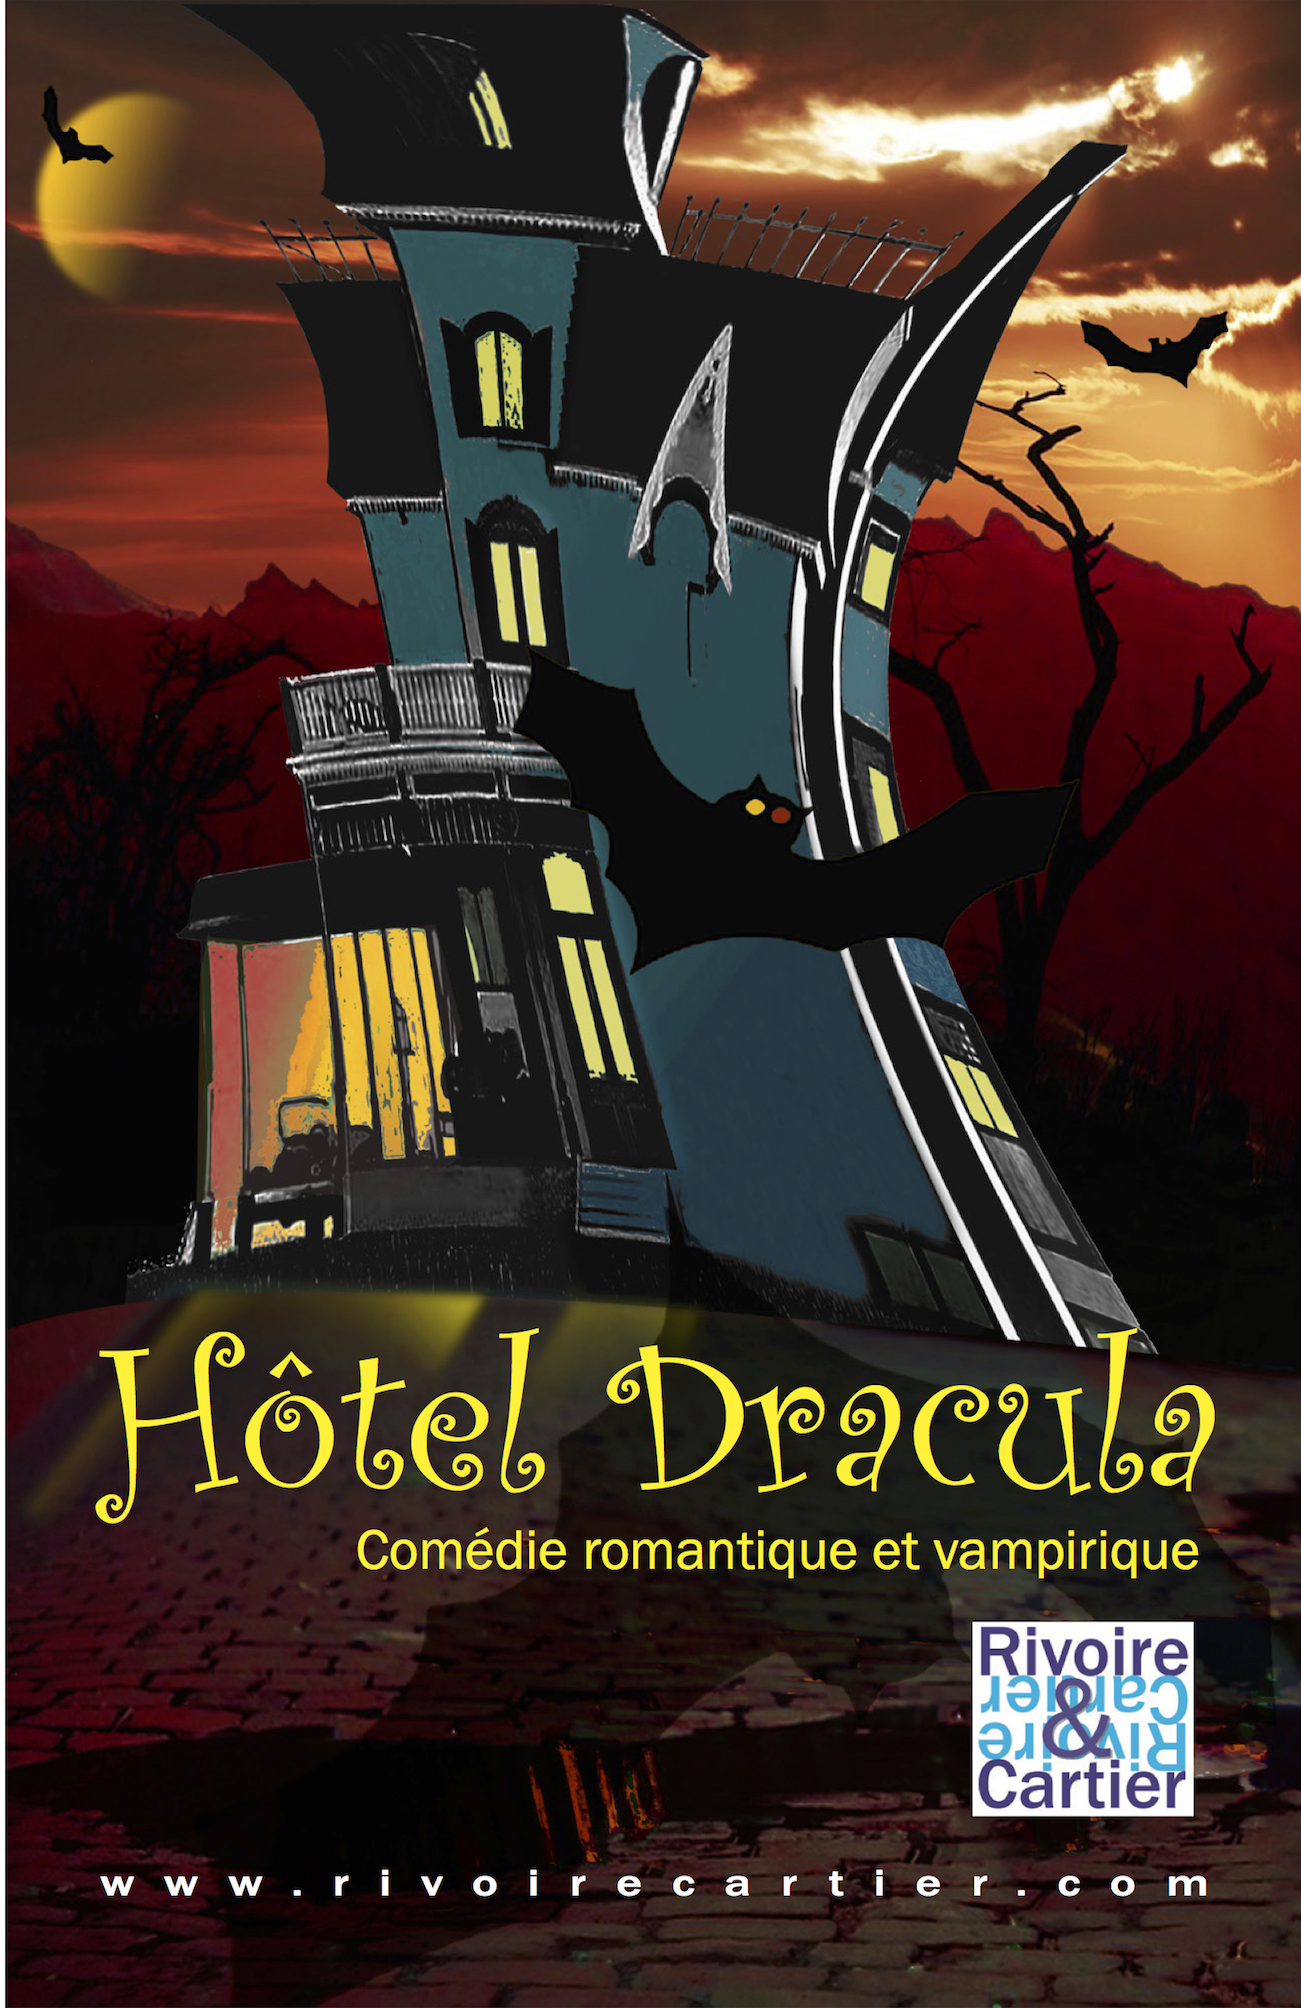 Hôtel Dracula